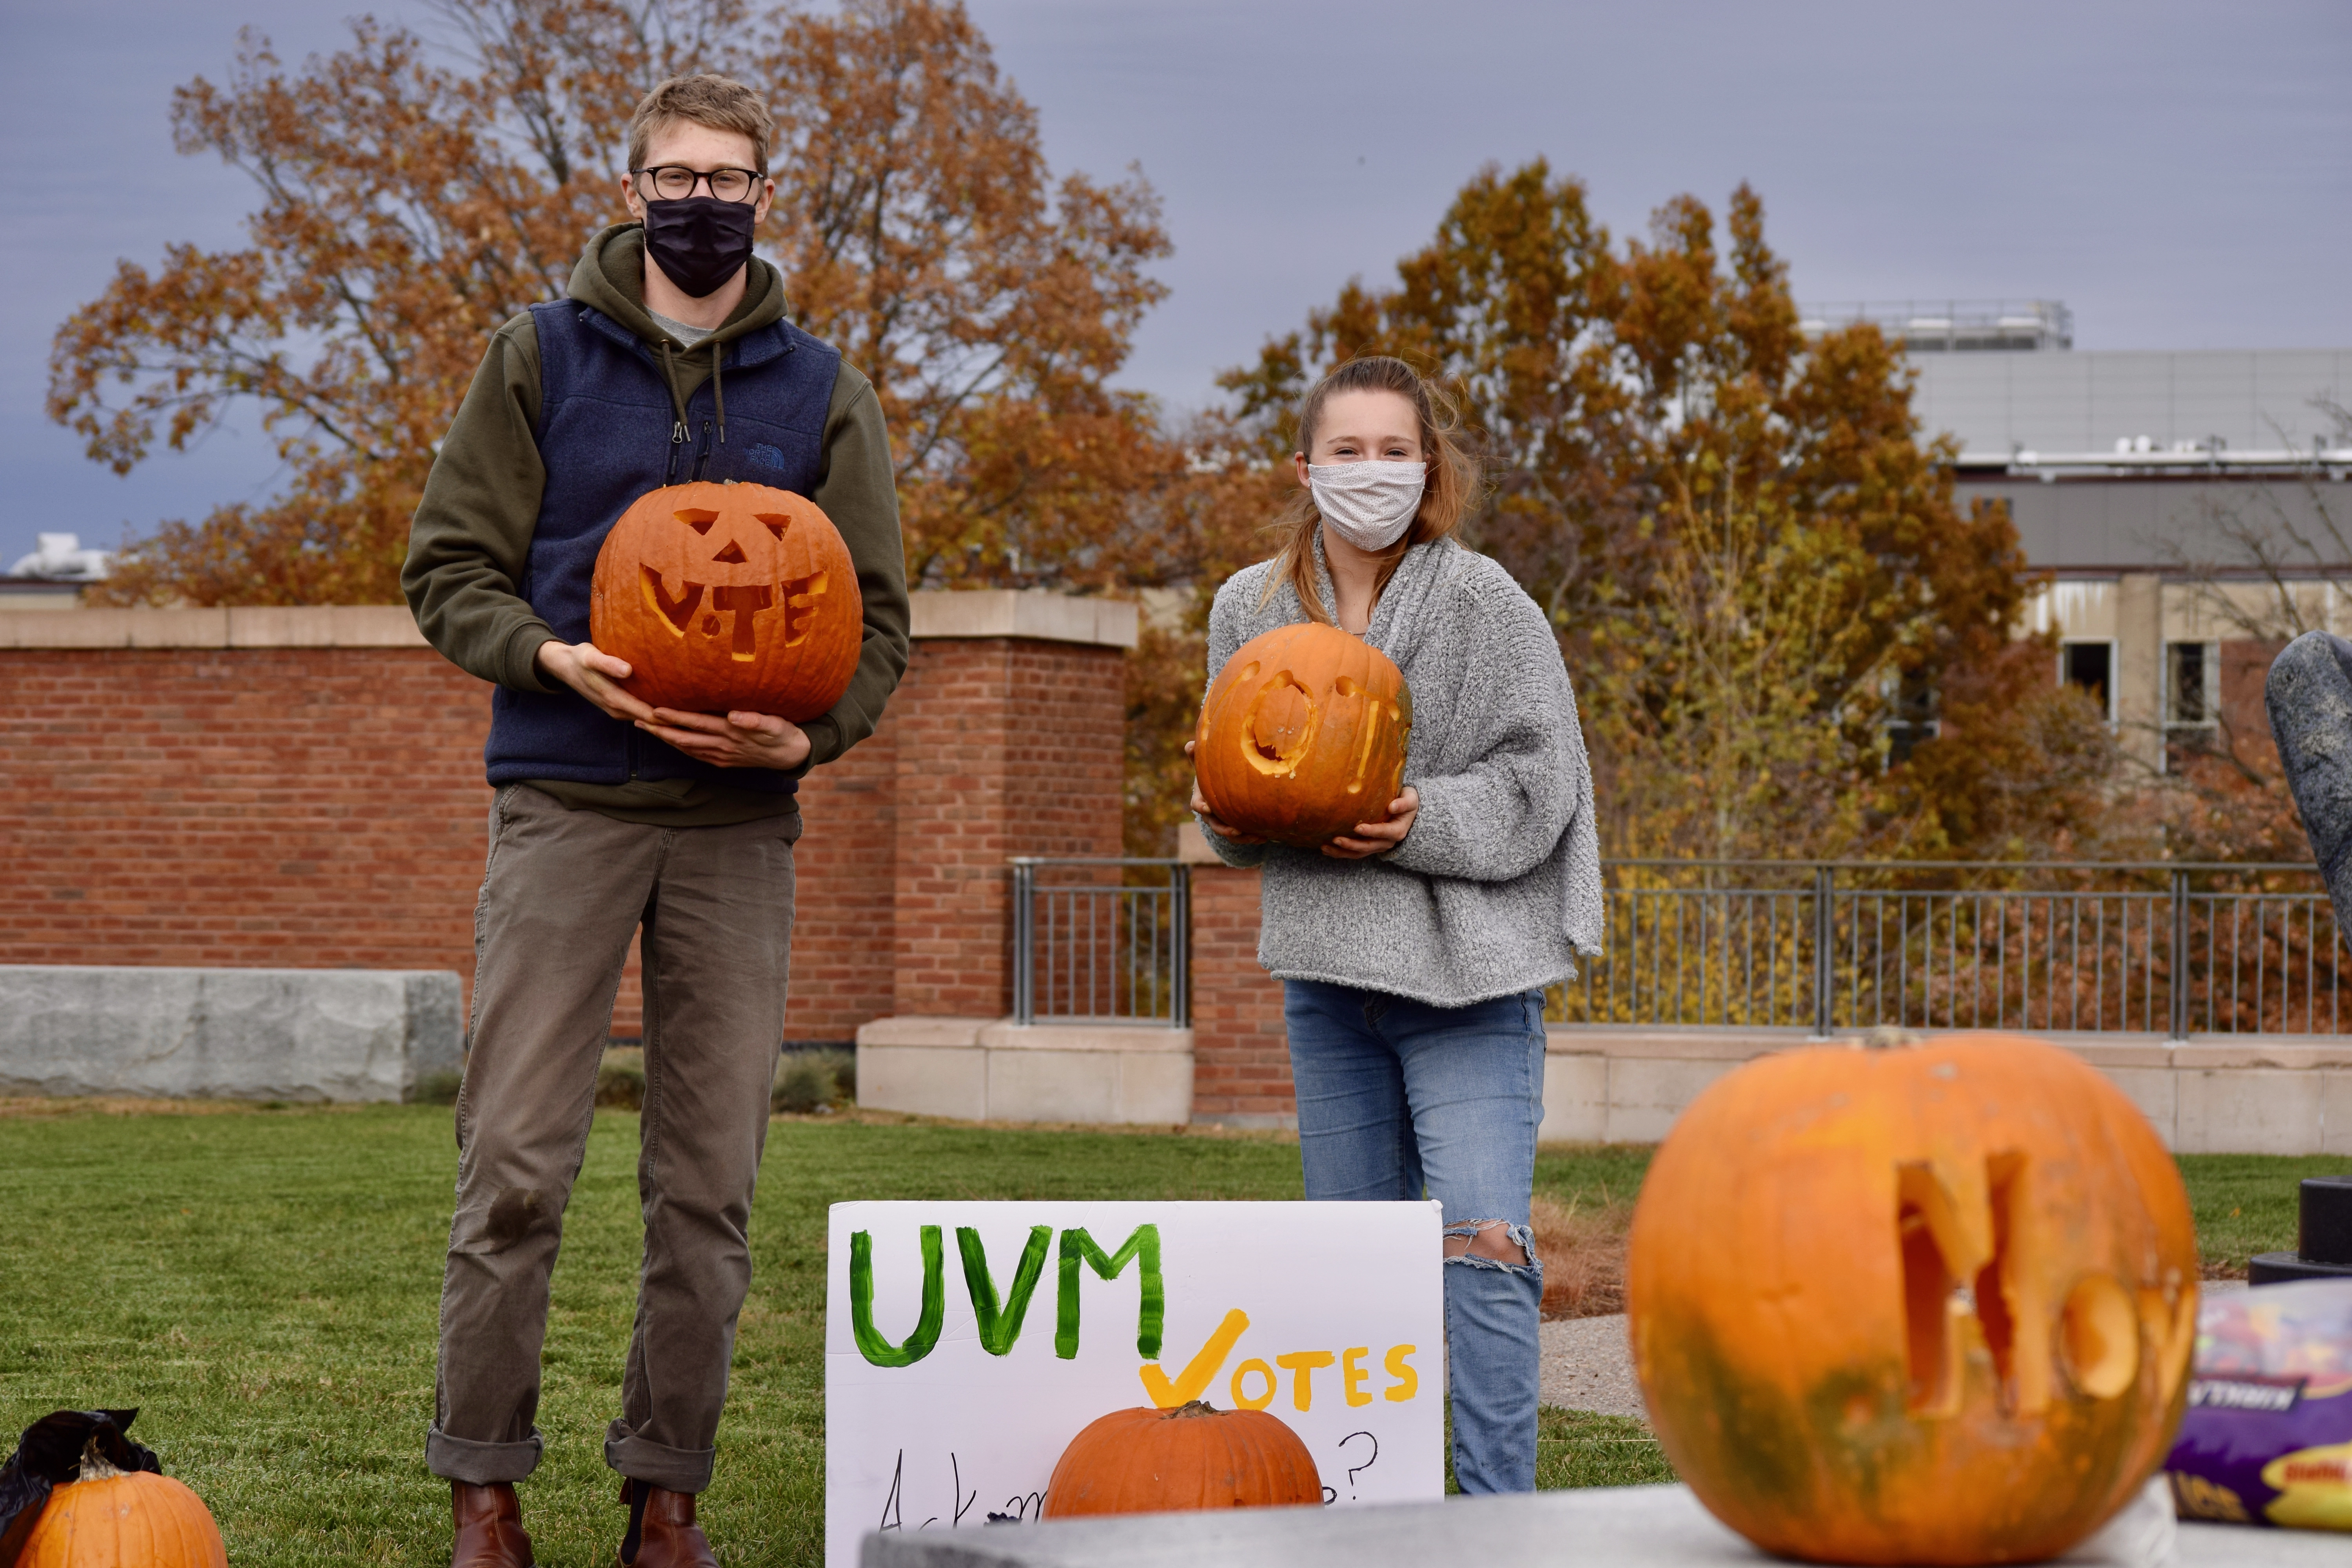 UVM Votes members carving pumpkins.